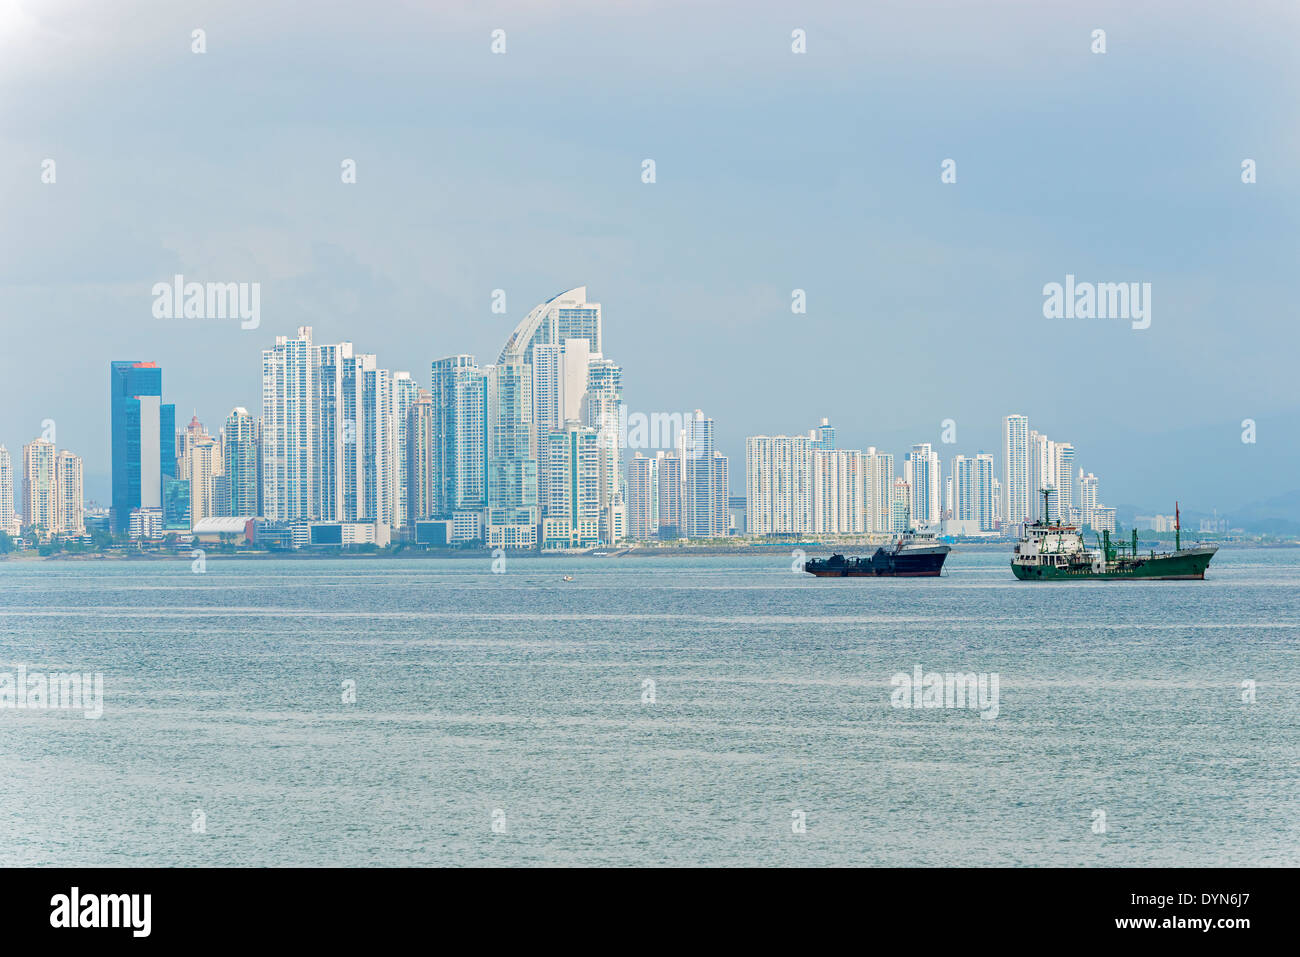 Shipping boats in Panama Bay on the background Panama City skyscrapers skyline. Sunny day in January 2, 2014. Stock Photo